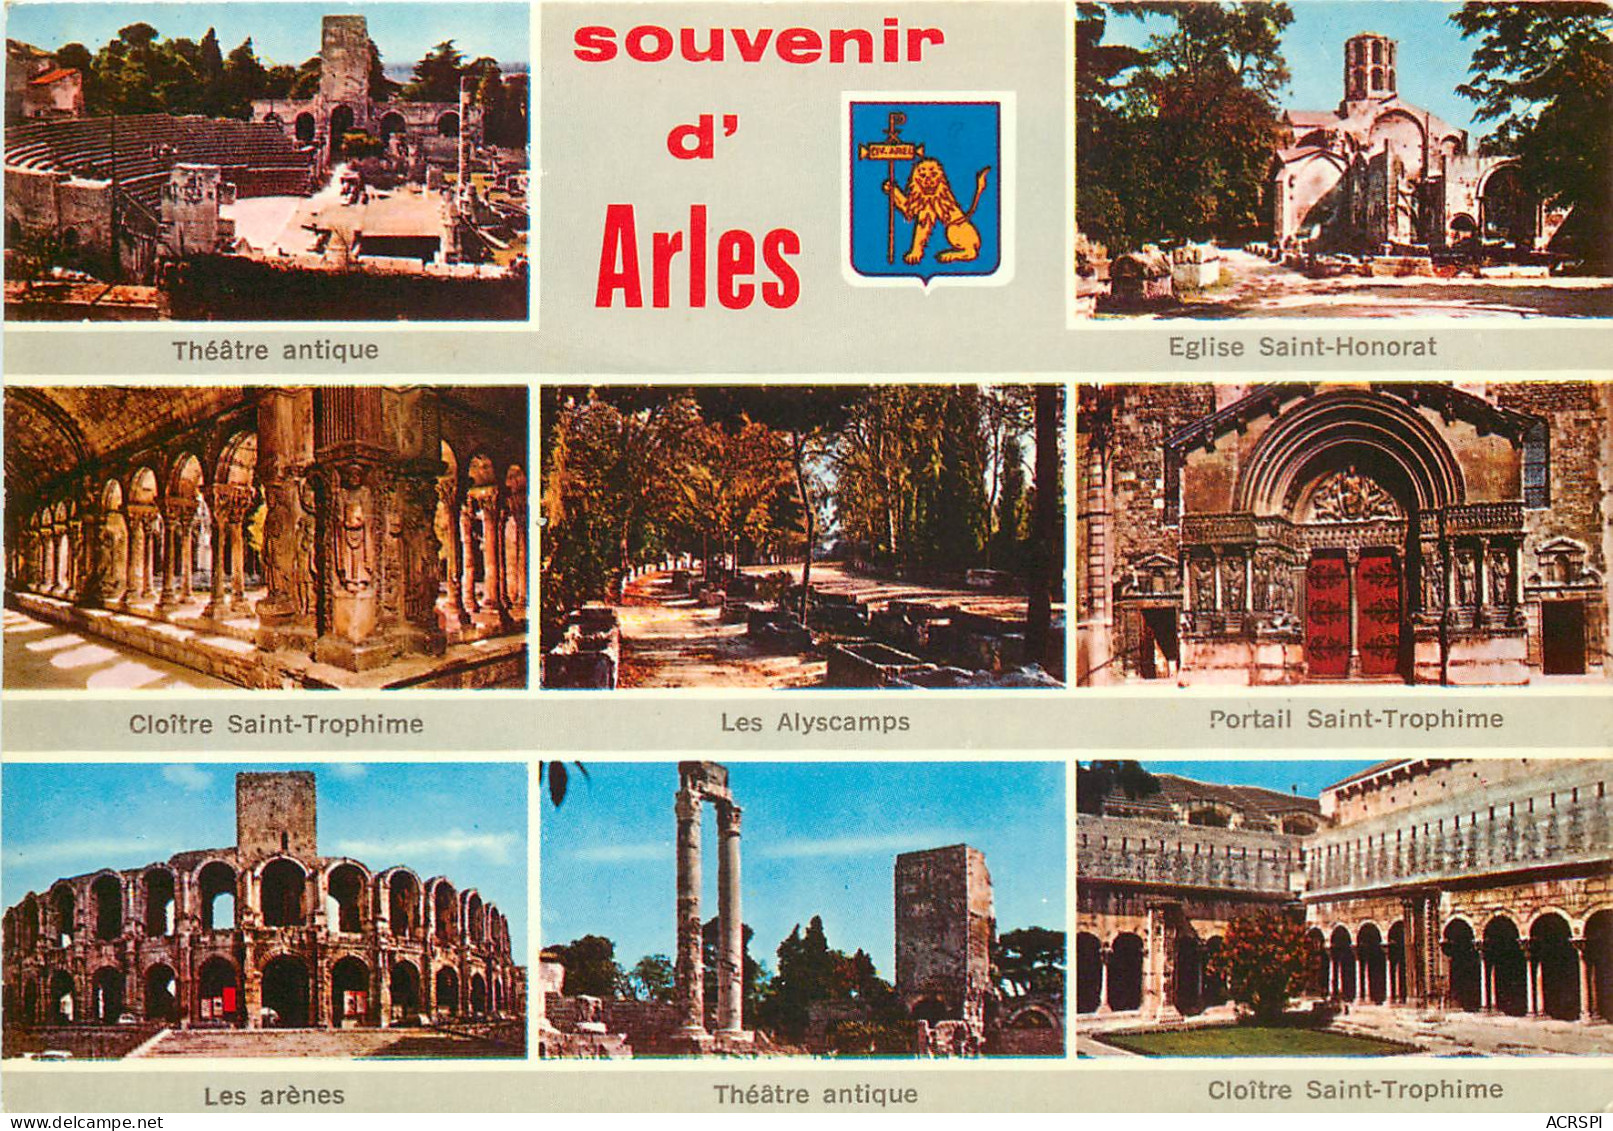 ARLES 24(scan Recto-verso) ME2601 - Arles